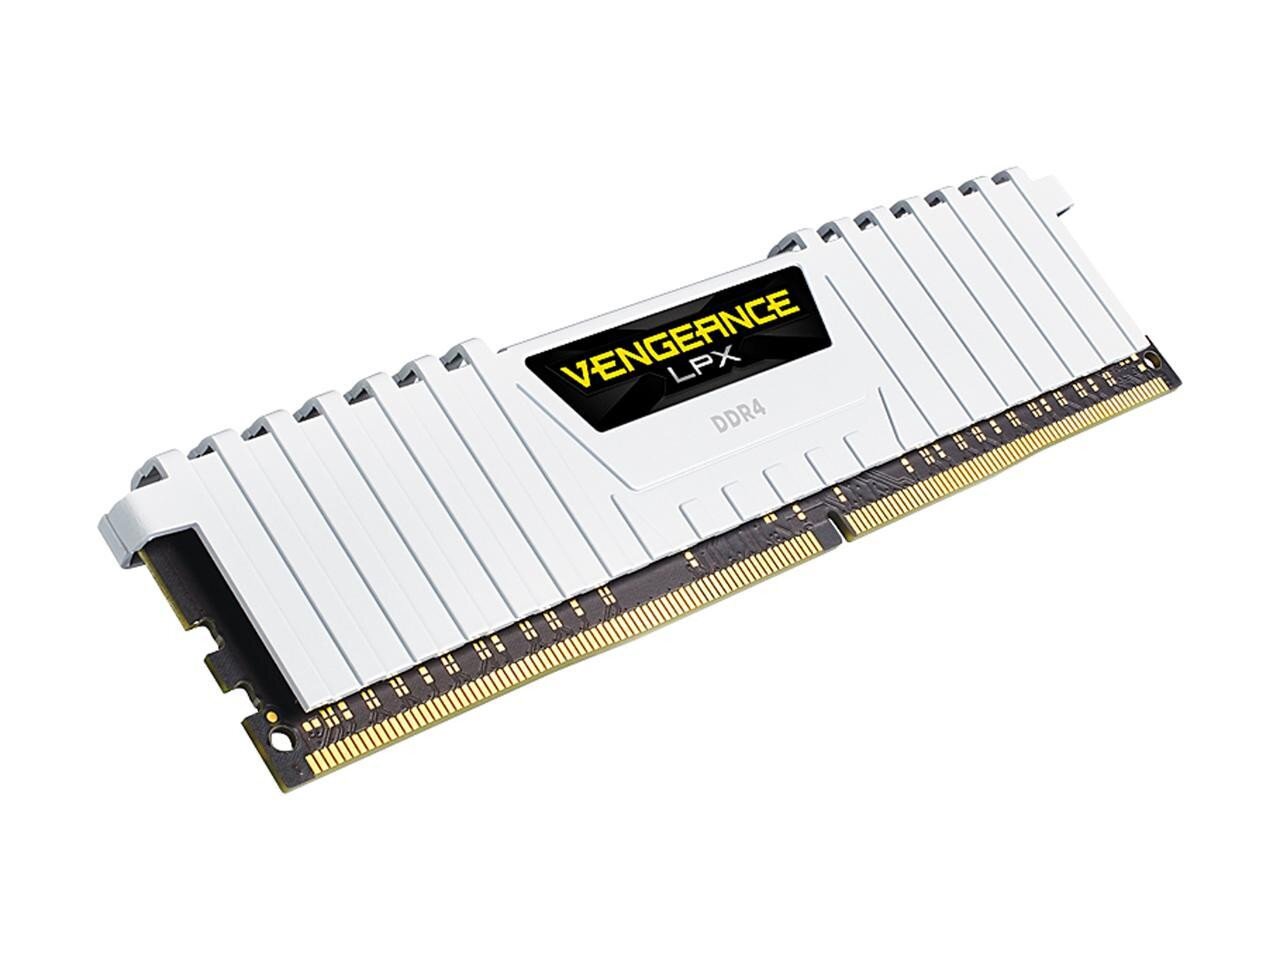 Buy Vengeance 16GB (2 x 8GB) DDR4 DRAM 3000MHz C16 Memory Kit online Worldwide - Tejar.com